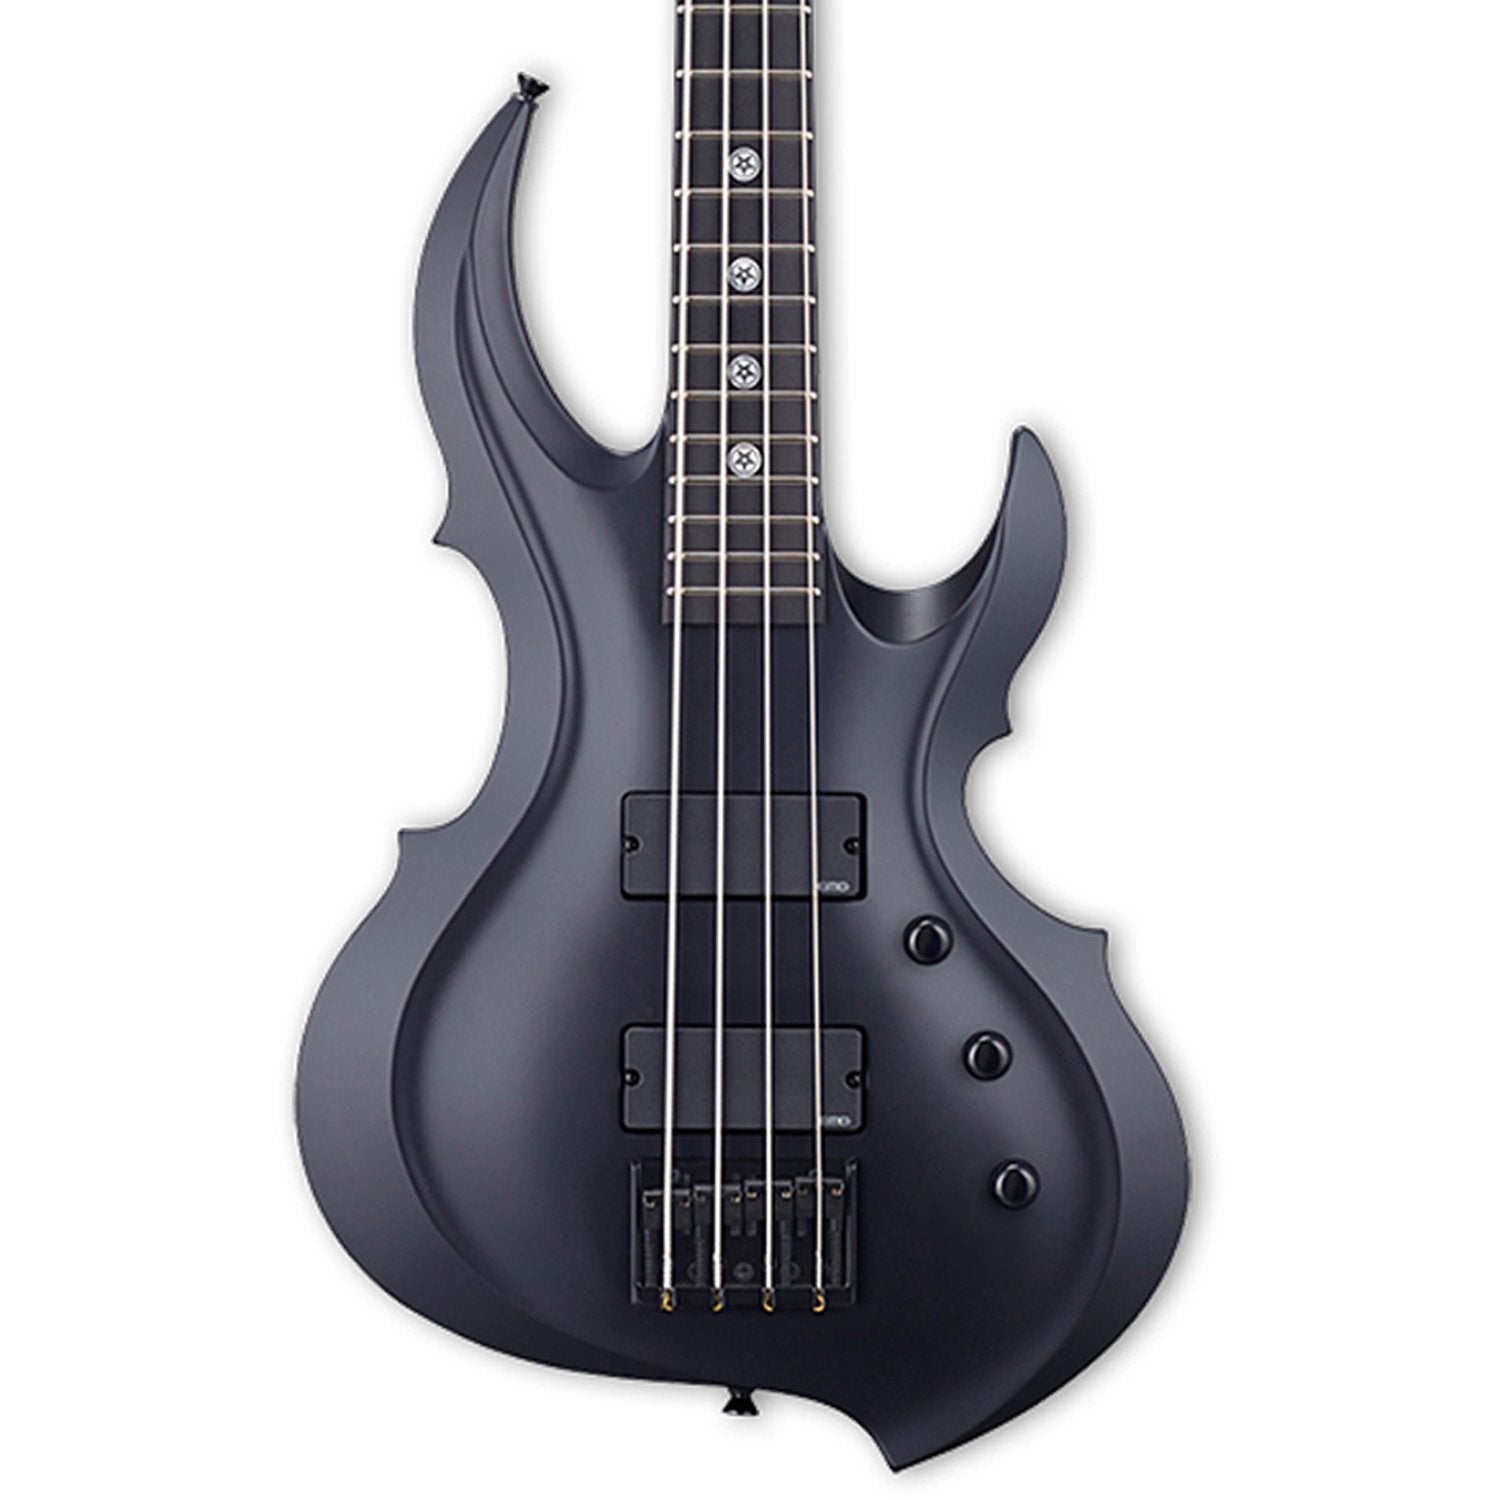 ESP Tom Araya FRX Signature Electric Guitar - Black Satin